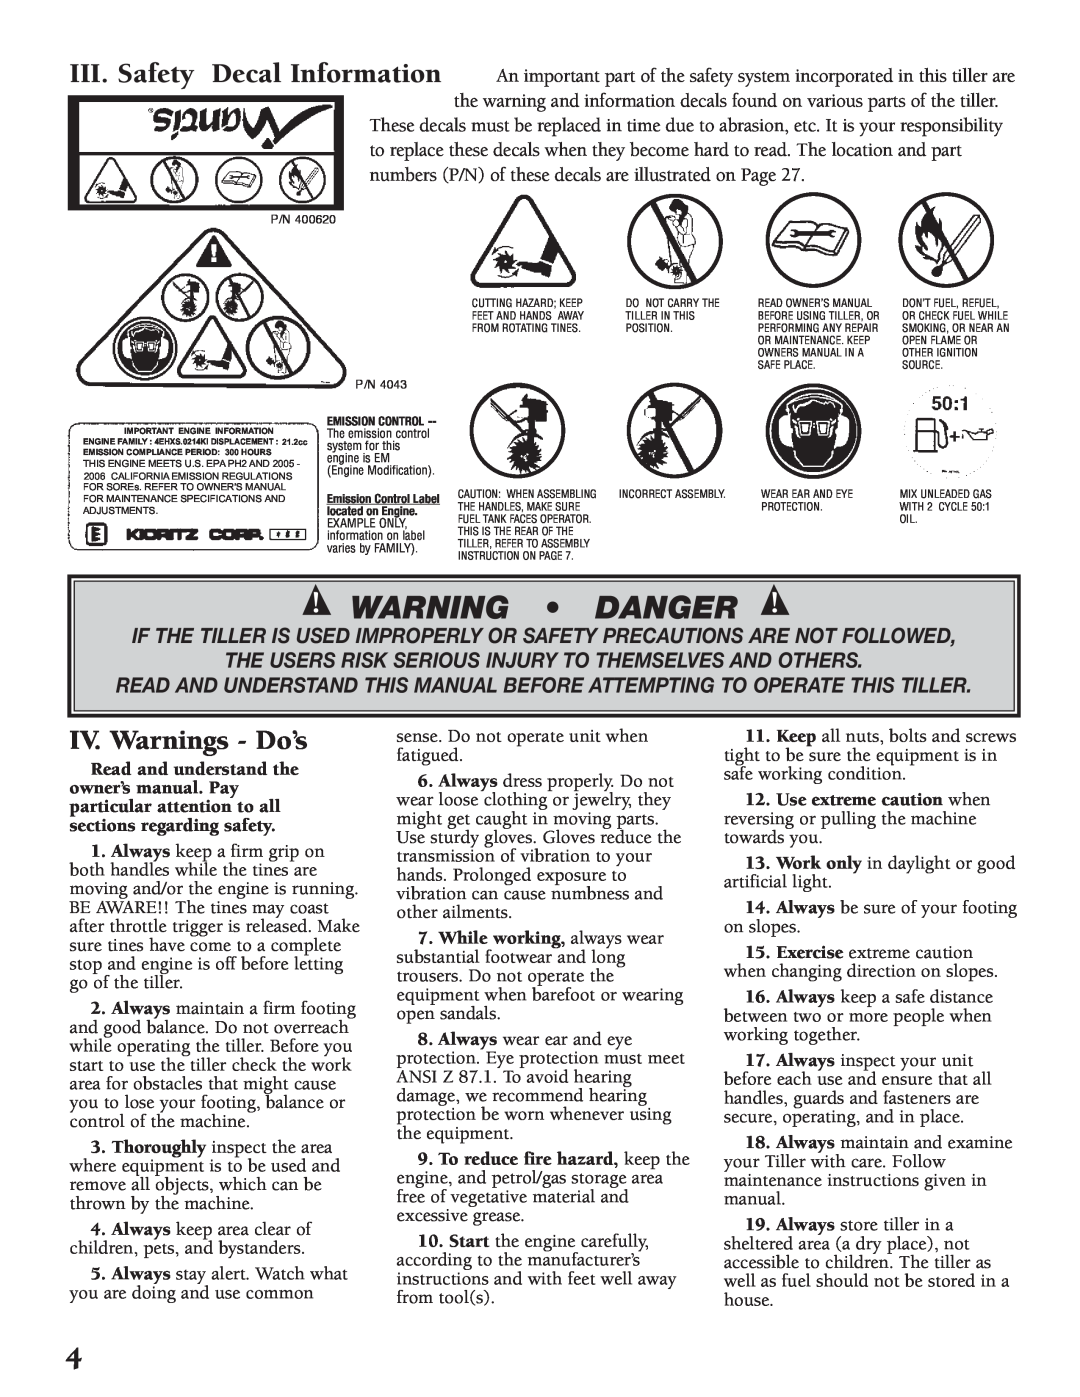 Little Wonder Tiller/Cultivator owner manual IV. Warnings - Do’s, Warning • Danger 